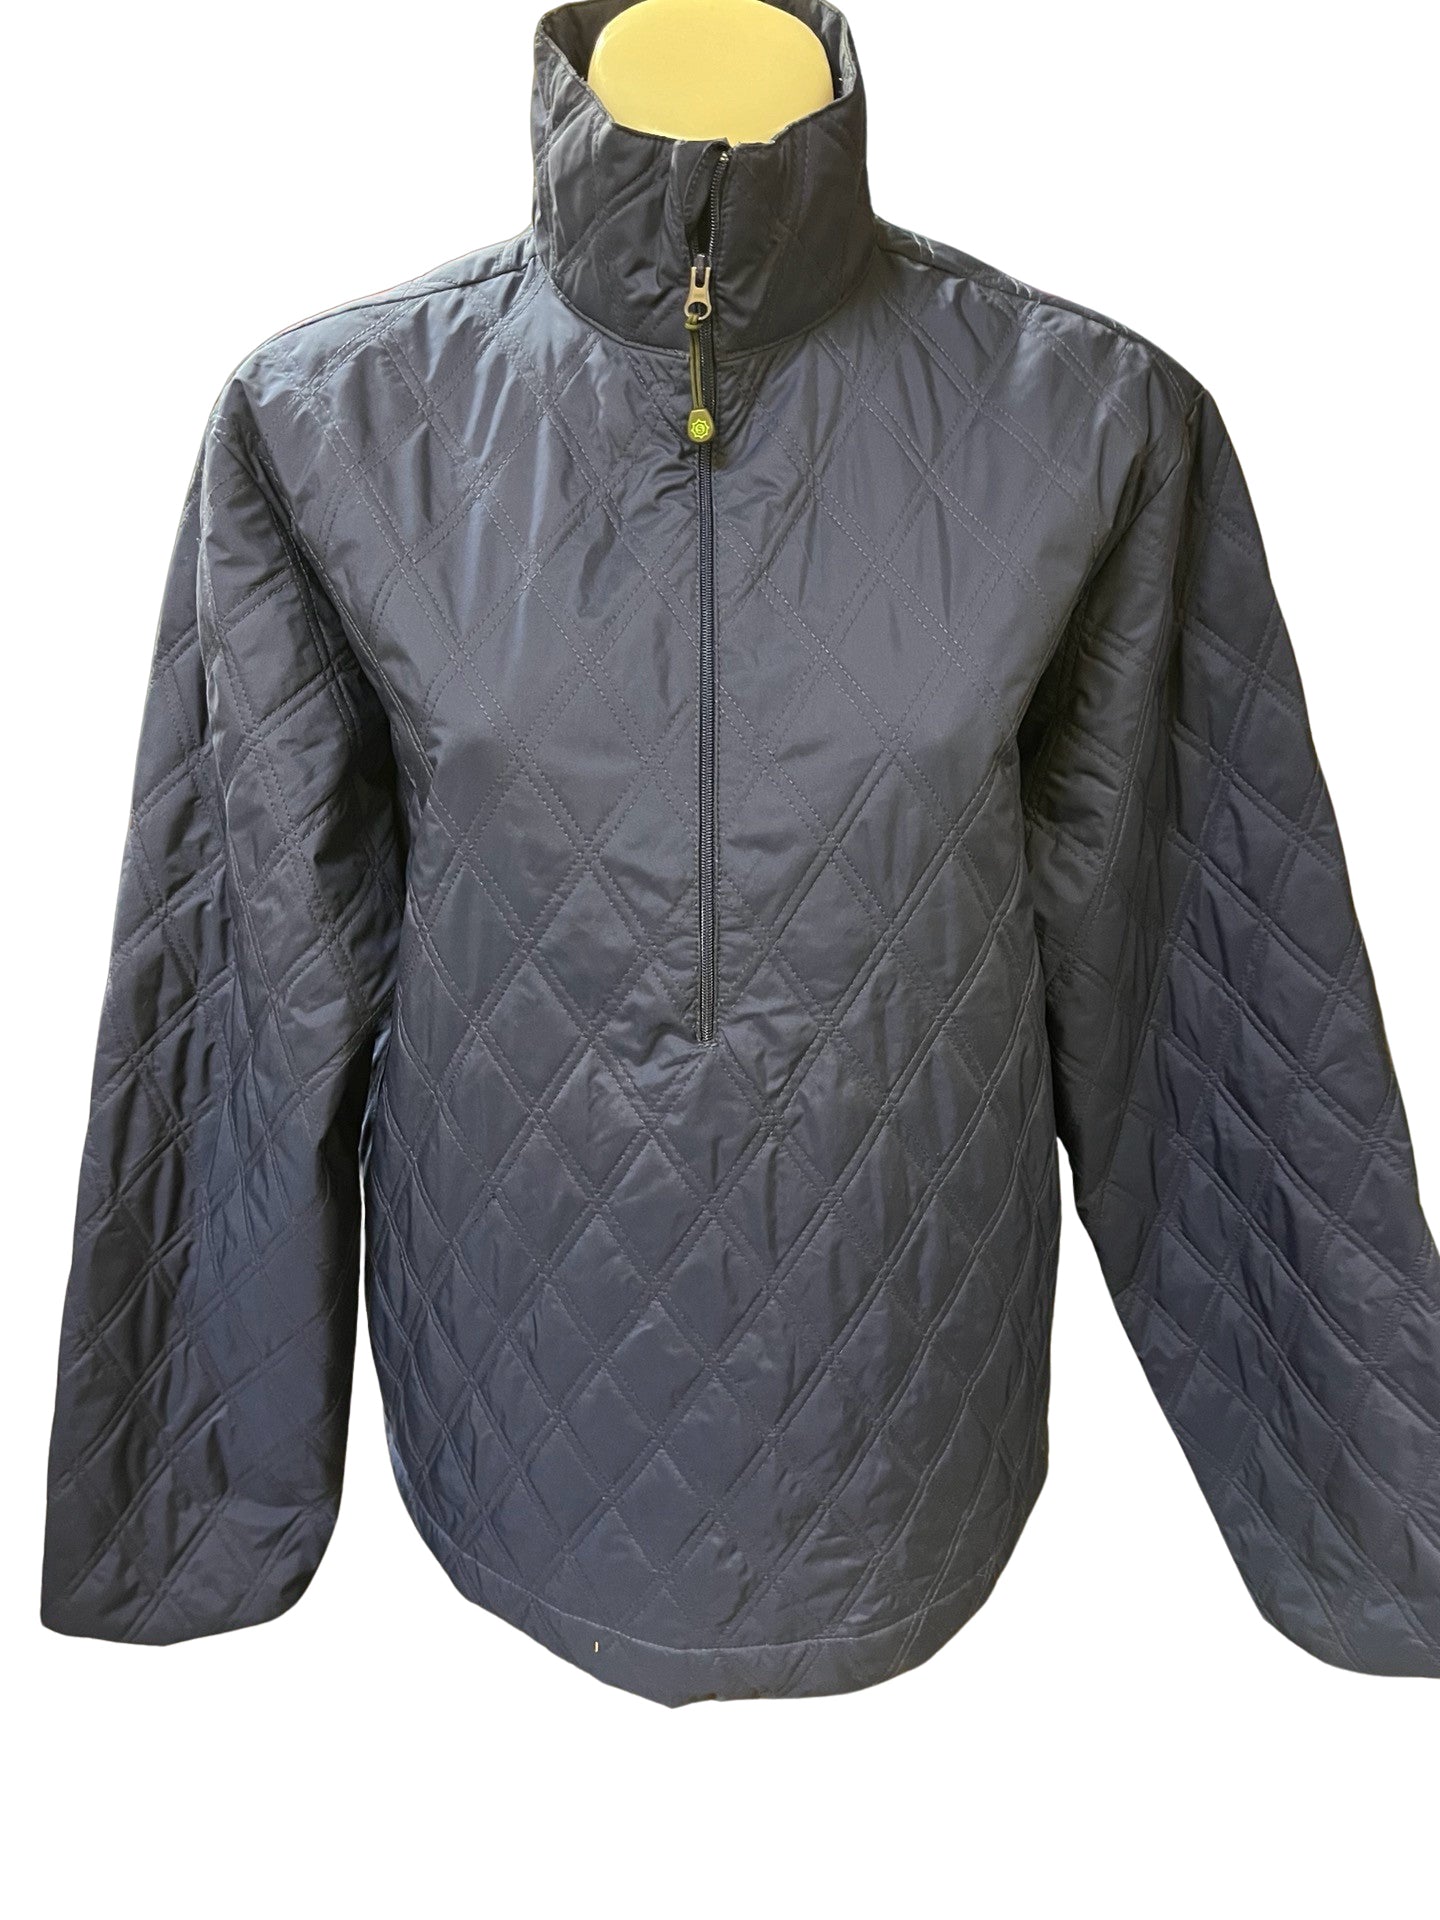 Size M Sahalie Jacket (Outdoor)